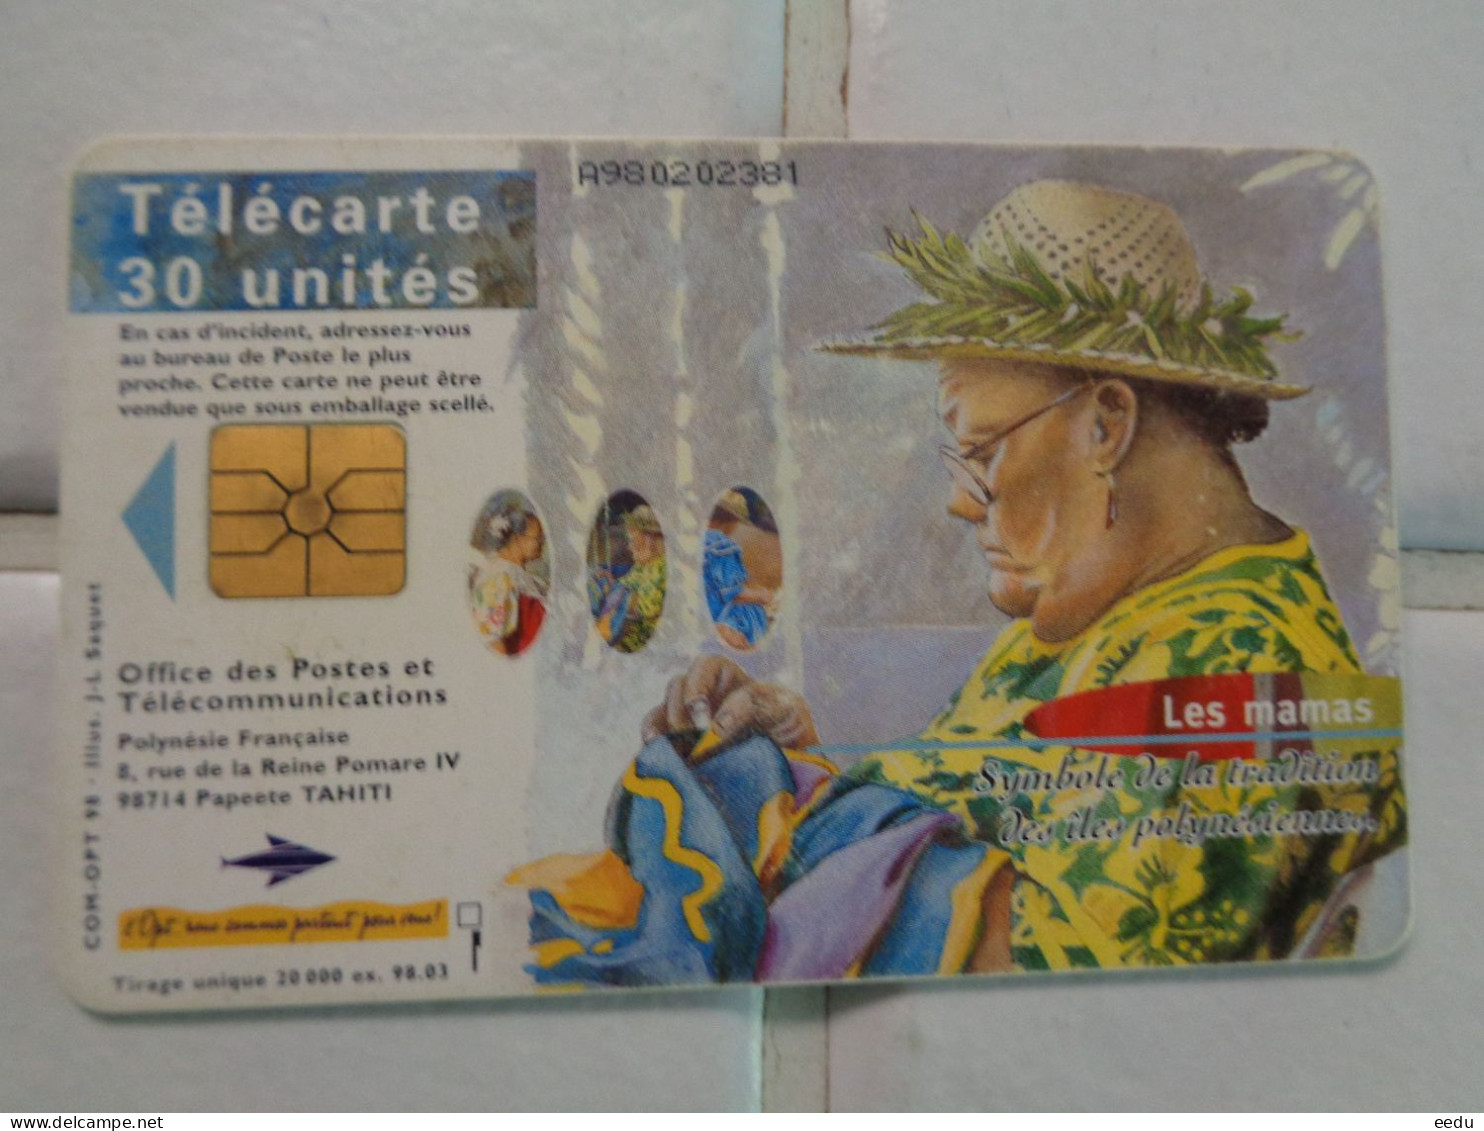 French Polynesia phonecard